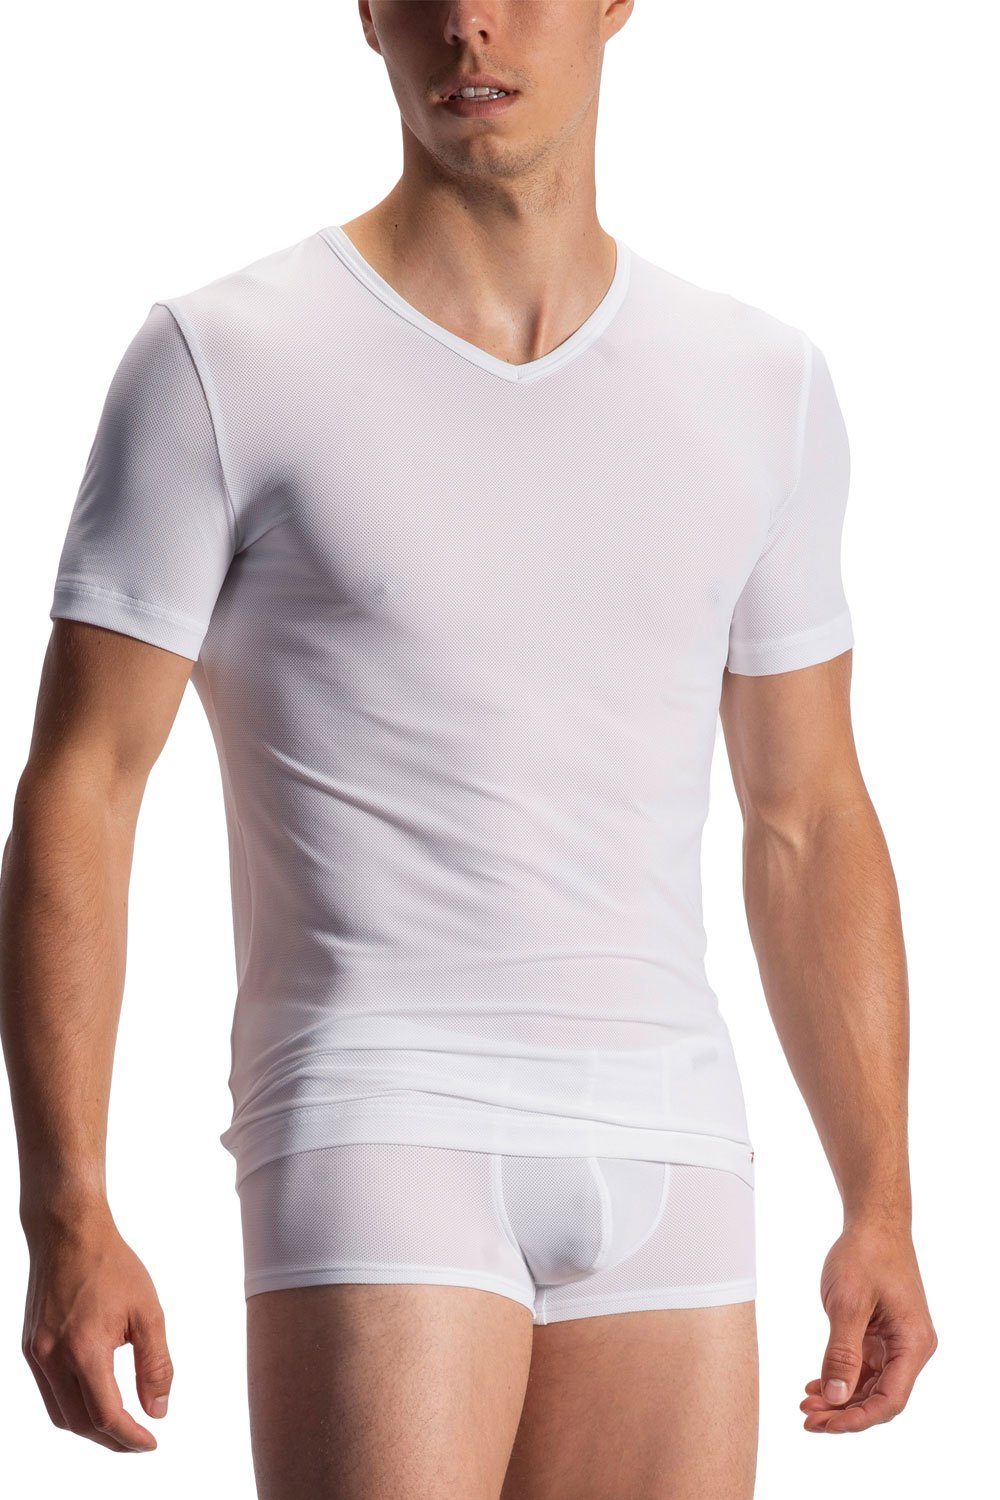 Olaf 108404 white (Reg) V-Neck T-Shirt Benz Shirt